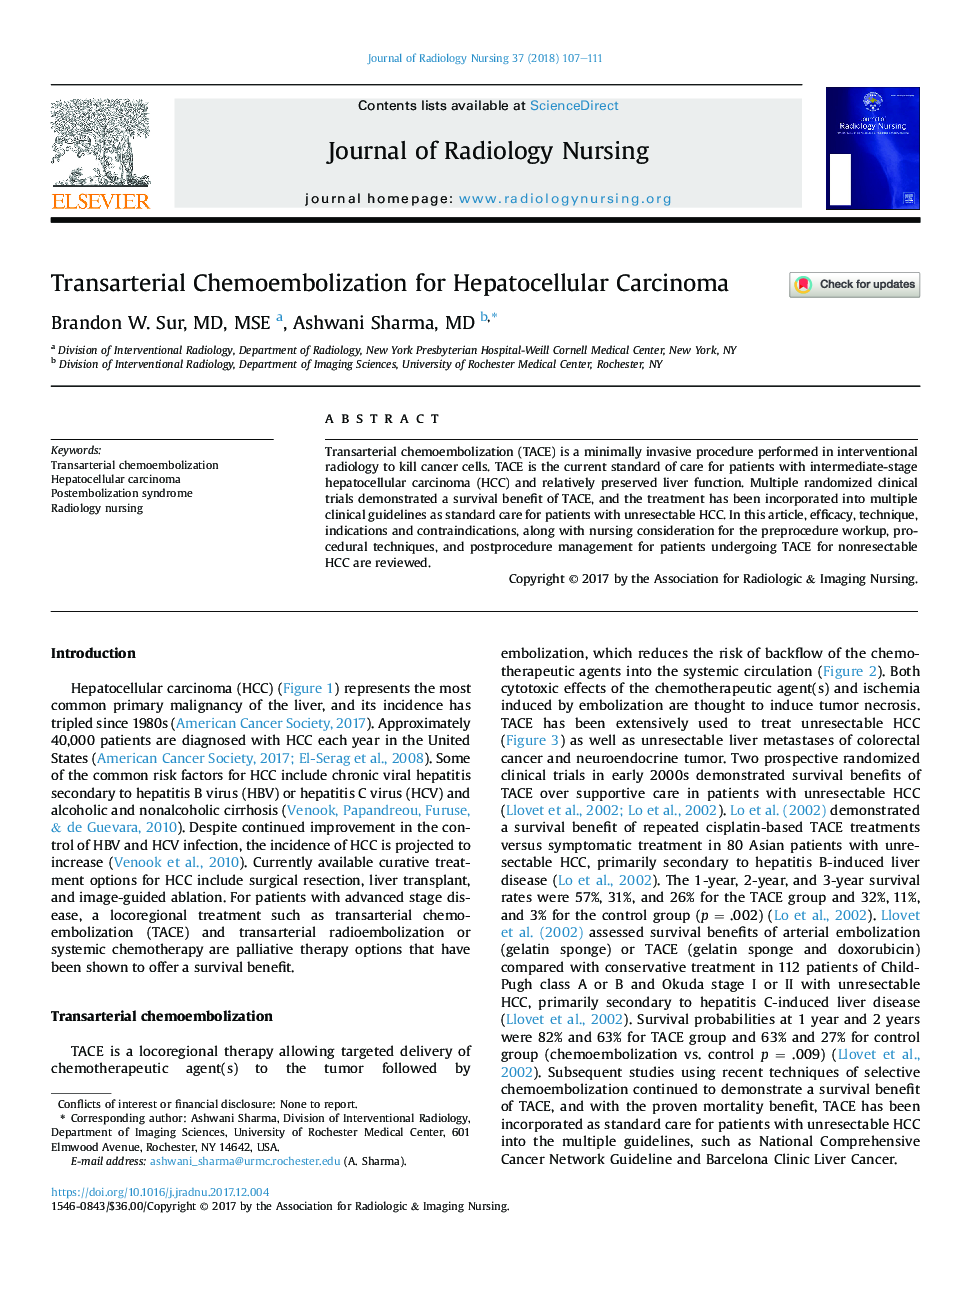 Transarterial Chemoembolization for Hepatocellular Carcinoma